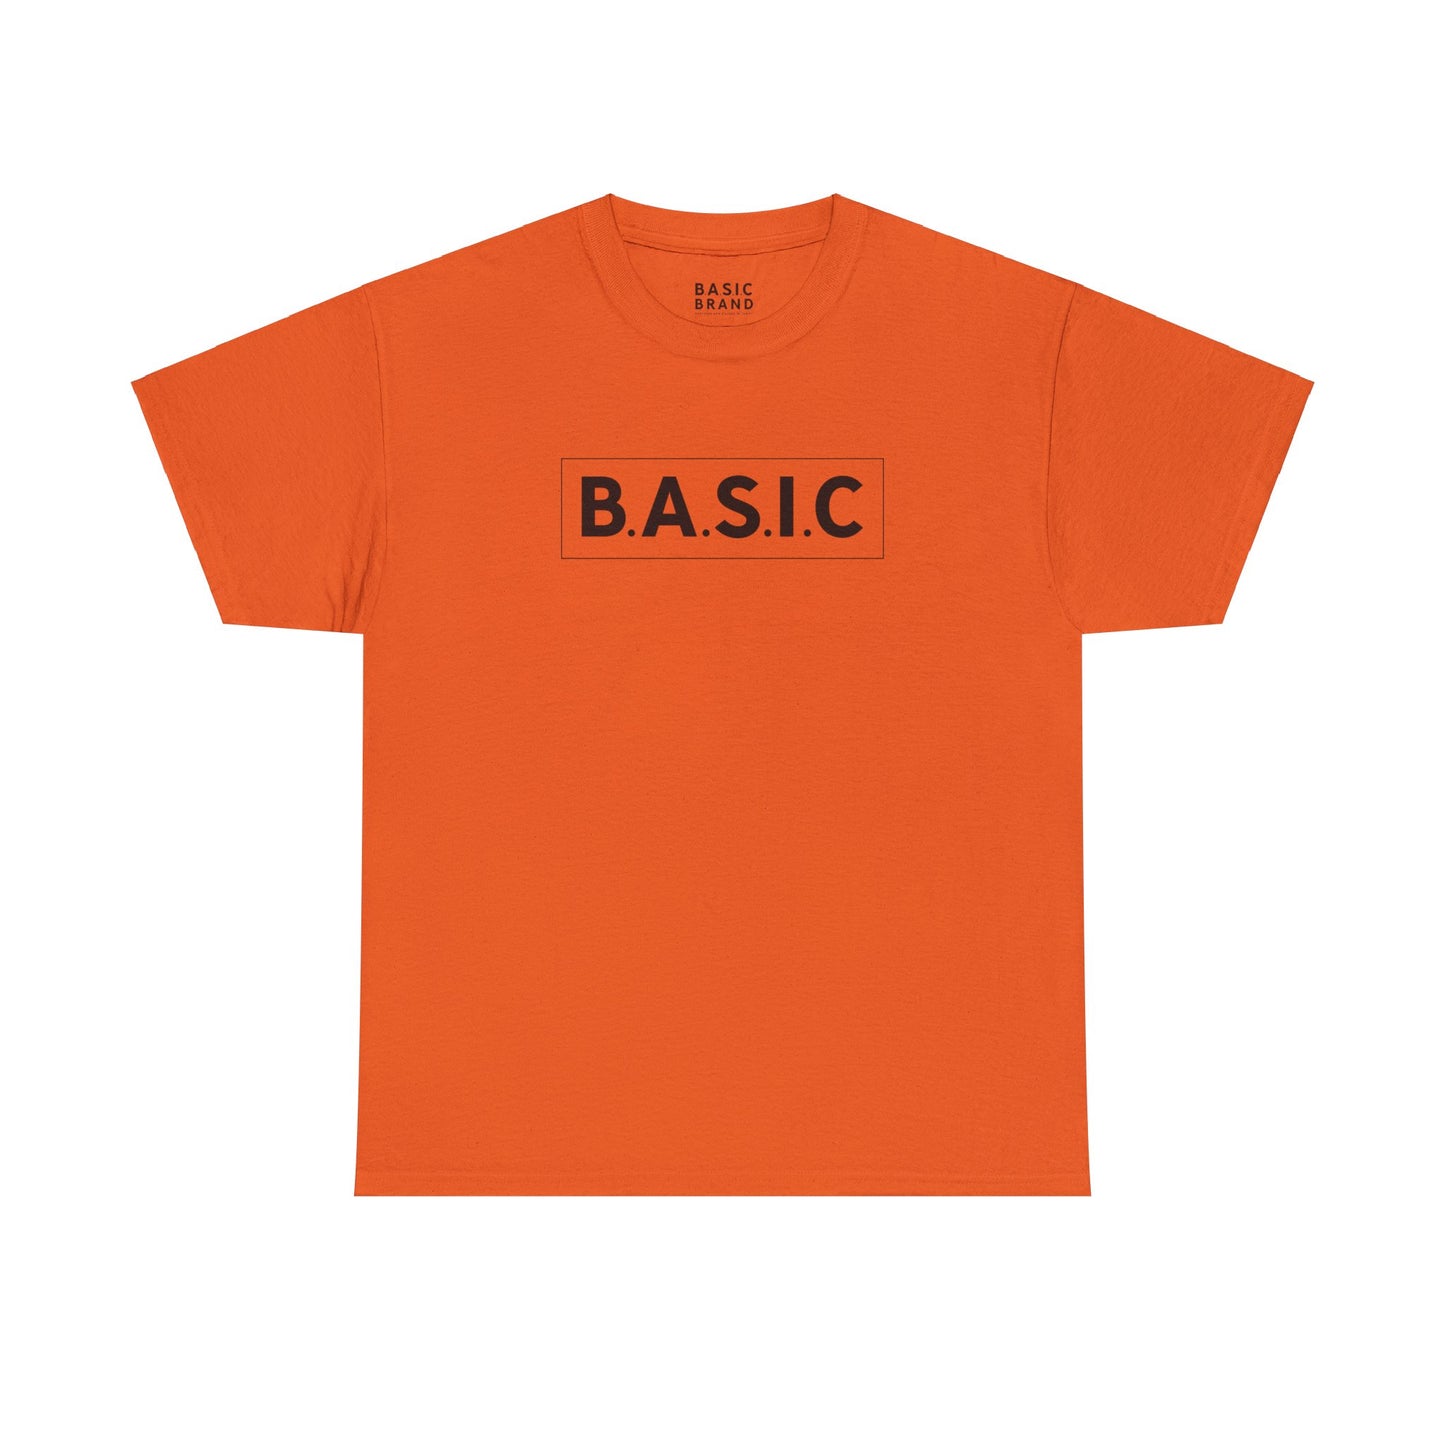 Men's B.A.S.I.C "Medium Sized Boxed Logo" Tee Shirt